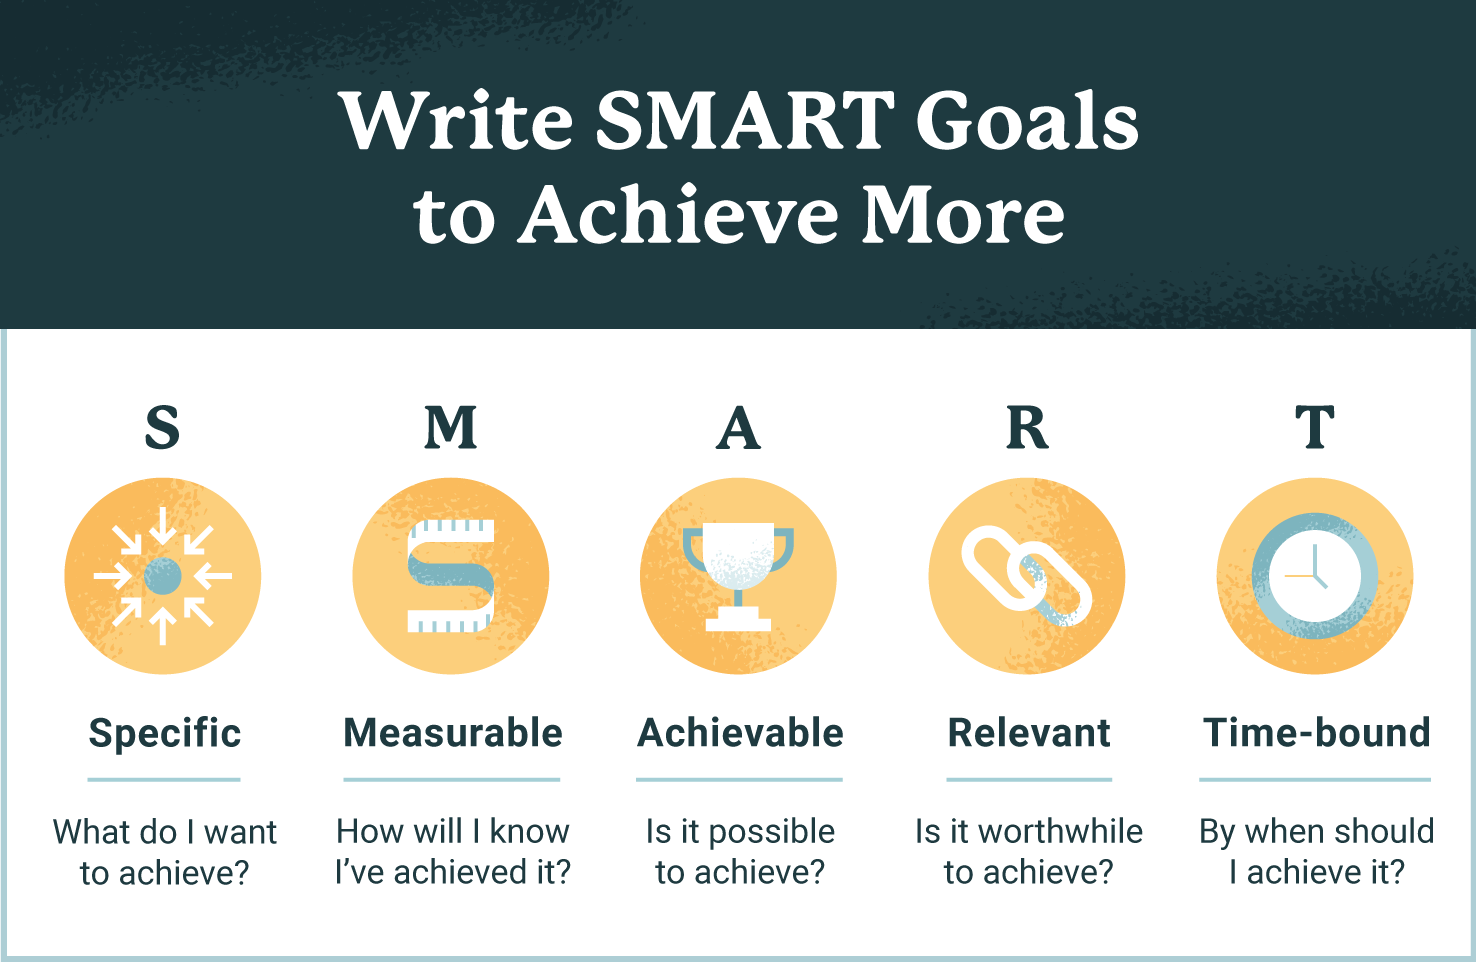 how to write SMART goals